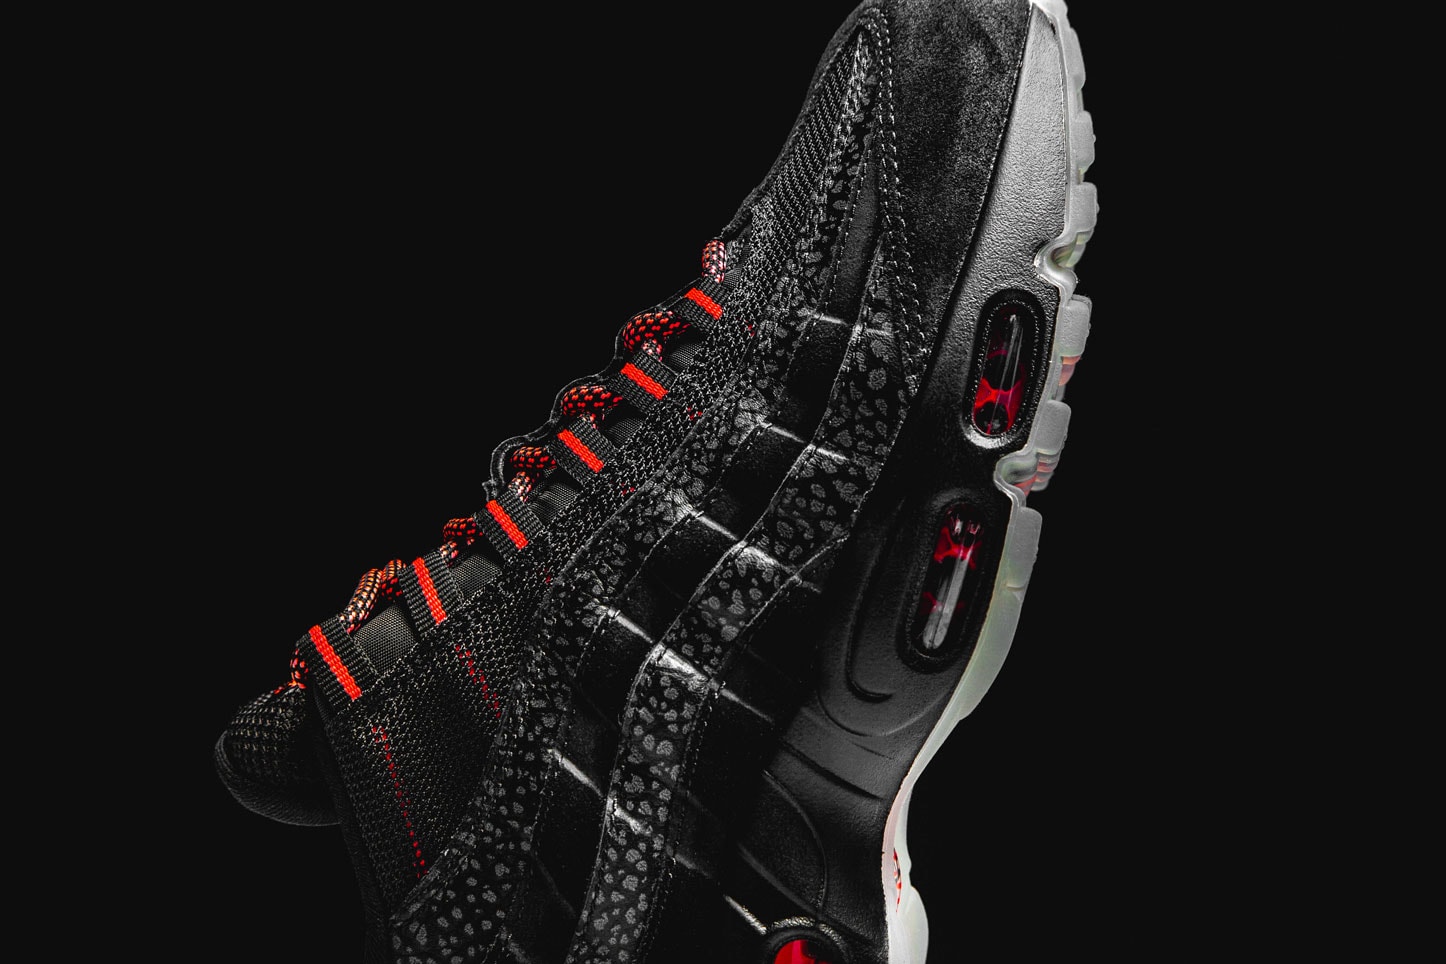 Nike Air Max 95 "Infrared/Black" Release Date black red sneaker 2018 safari print "Keep Rippin Stop Slippin" colorway sneaker